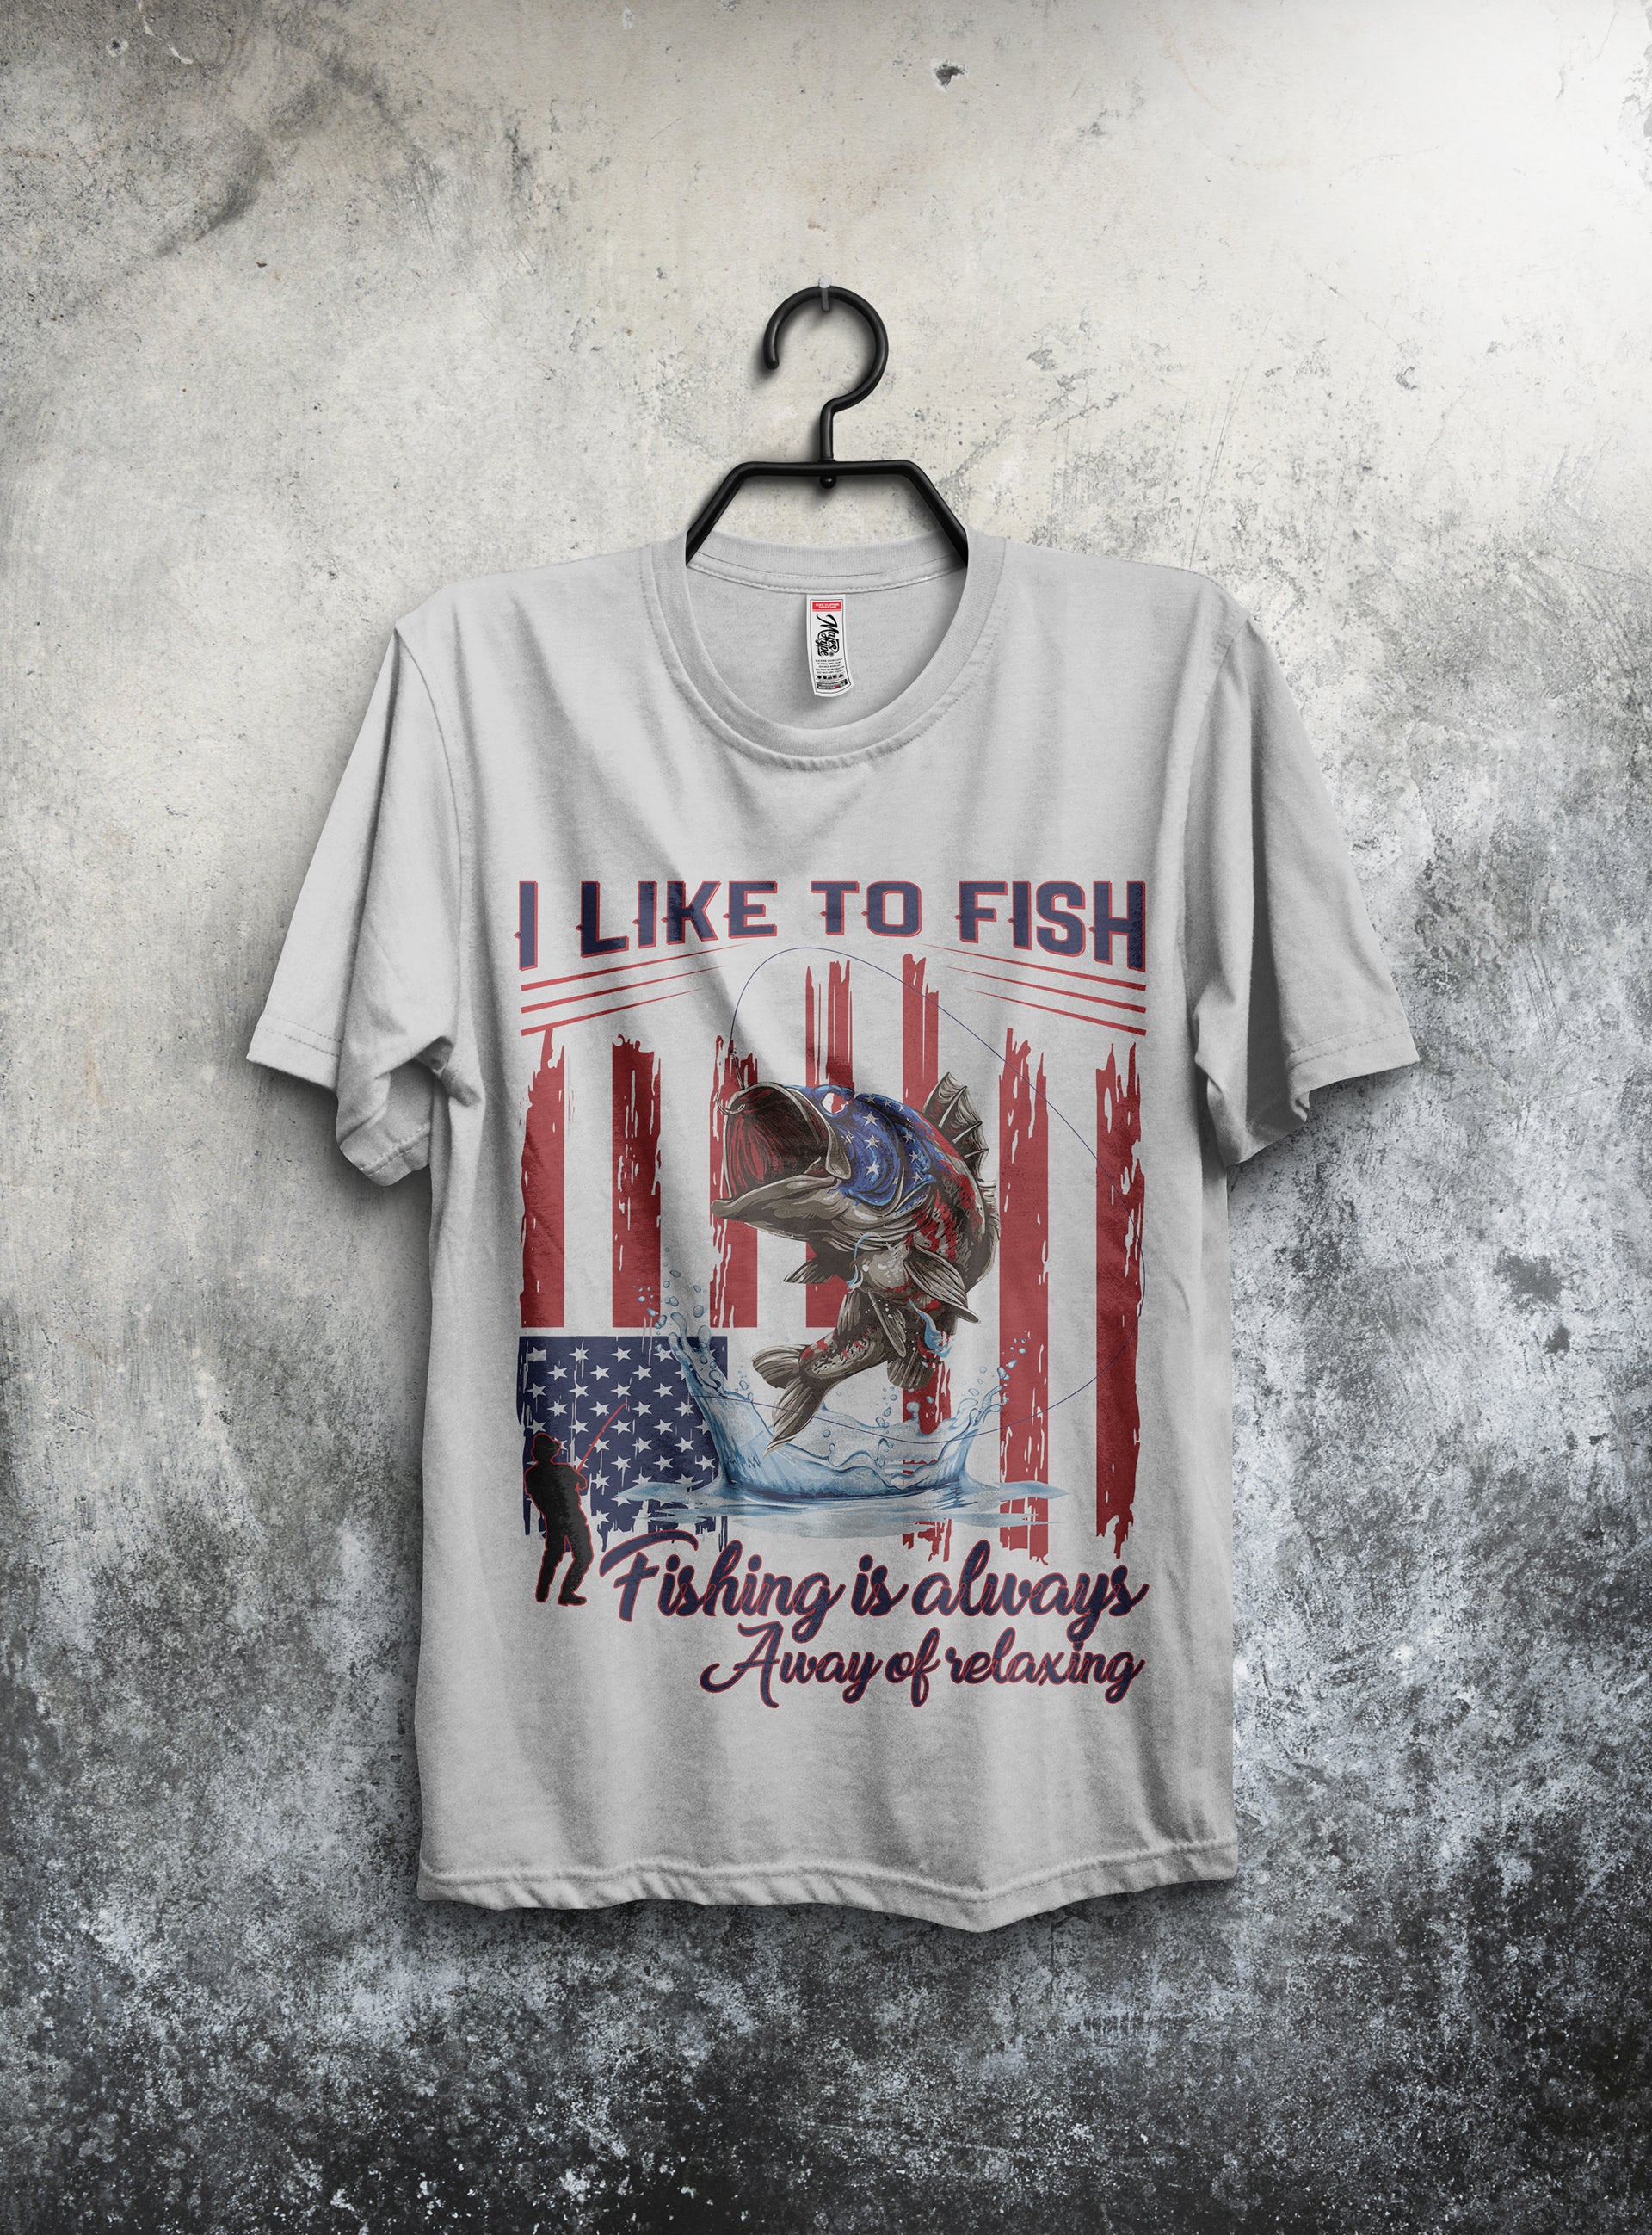 Fishing T-Shirts Bundle With Free Mockup - Mockup Hunt